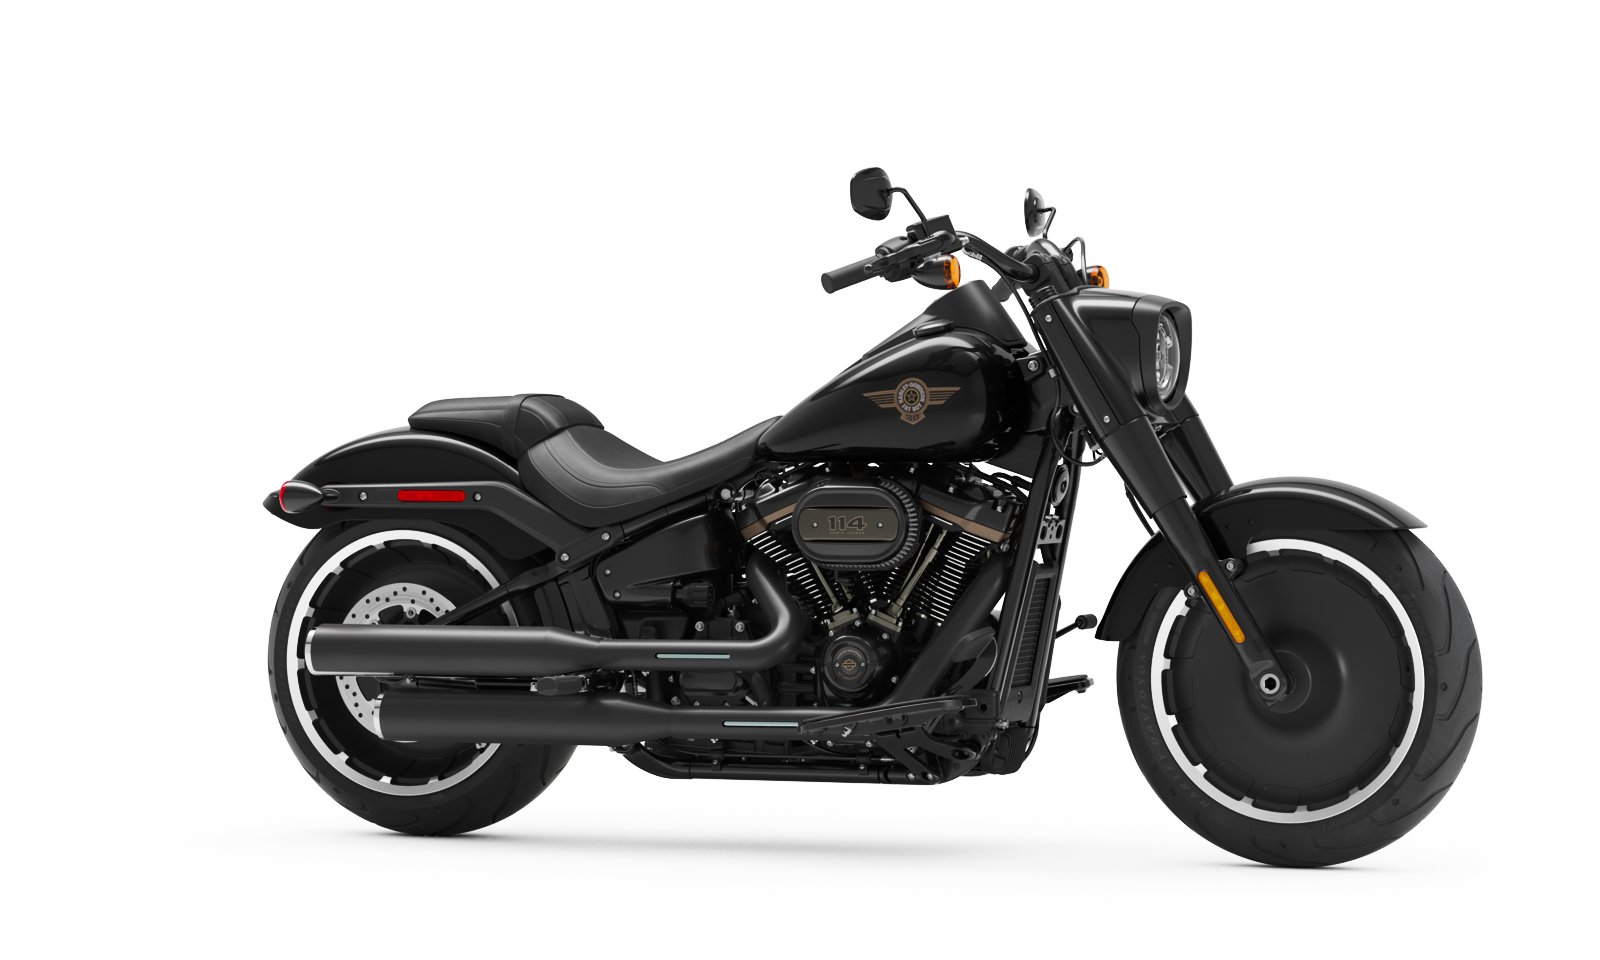 2020 Fat Boy Motorcycle Harley Davidson United States